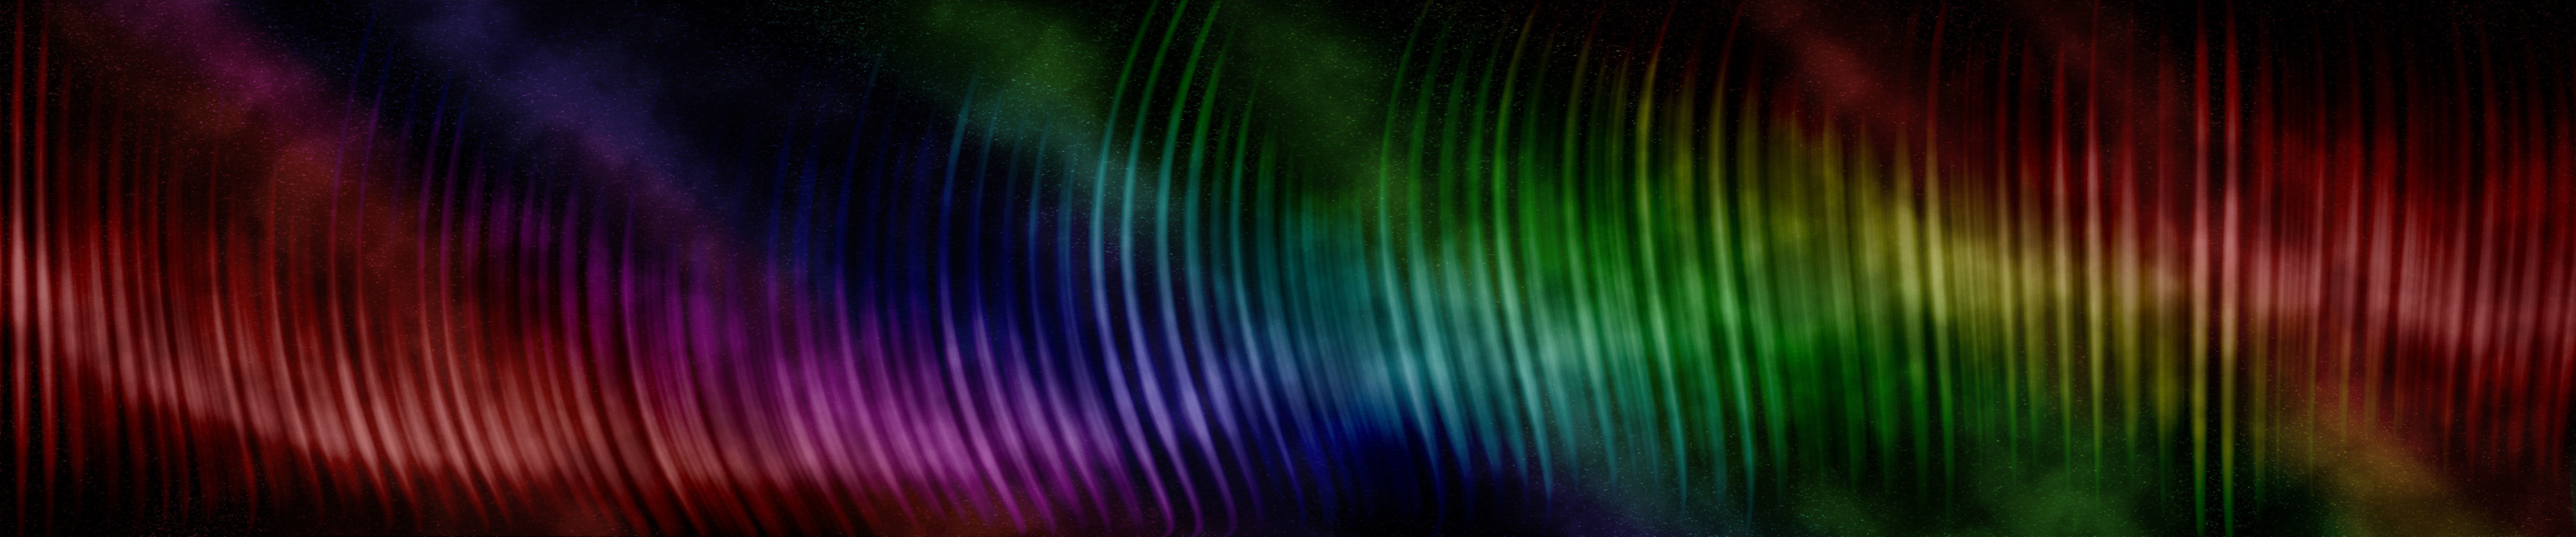 3x fondo de pantalla,verde,púrpura,violeta,ligero,arte fractal